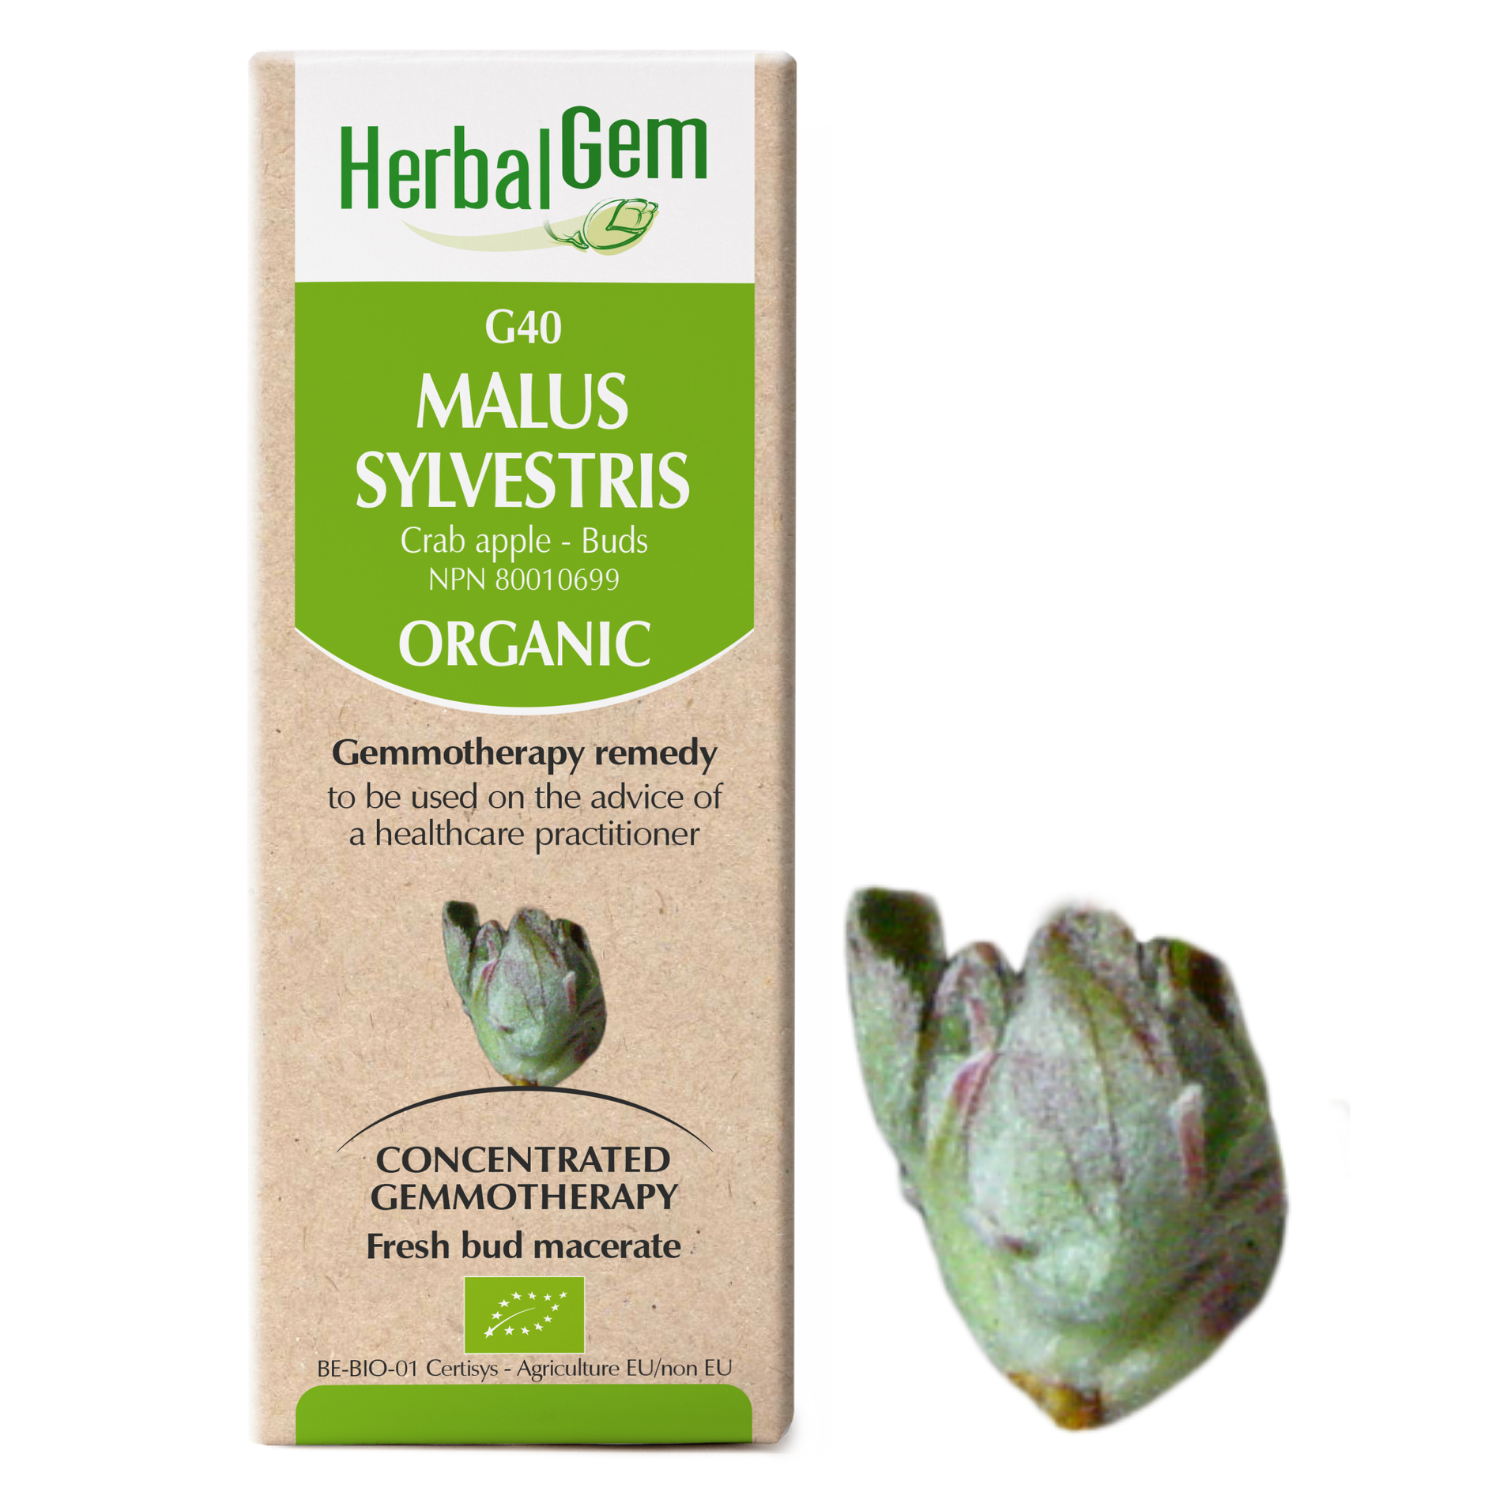 G40 Malus sylvestris Gemmotherapy remedy Organic